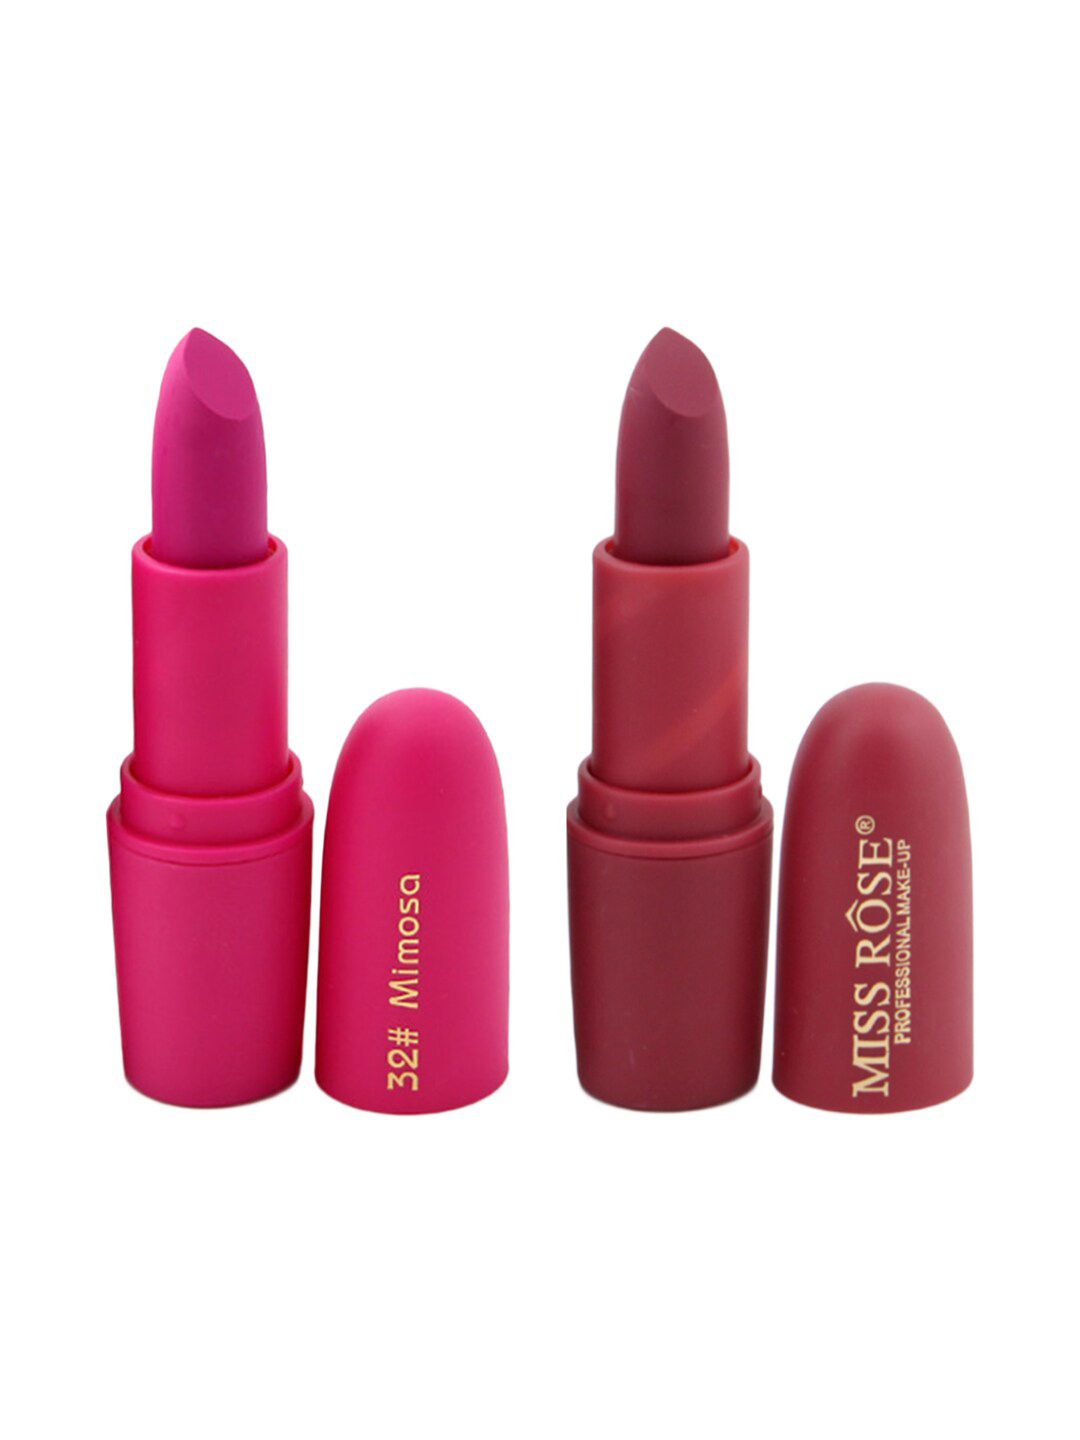 MISS ROSE Set of 2 Matte Creamy Lipsticks - Mimosa 32 & Chii 49 Price in India